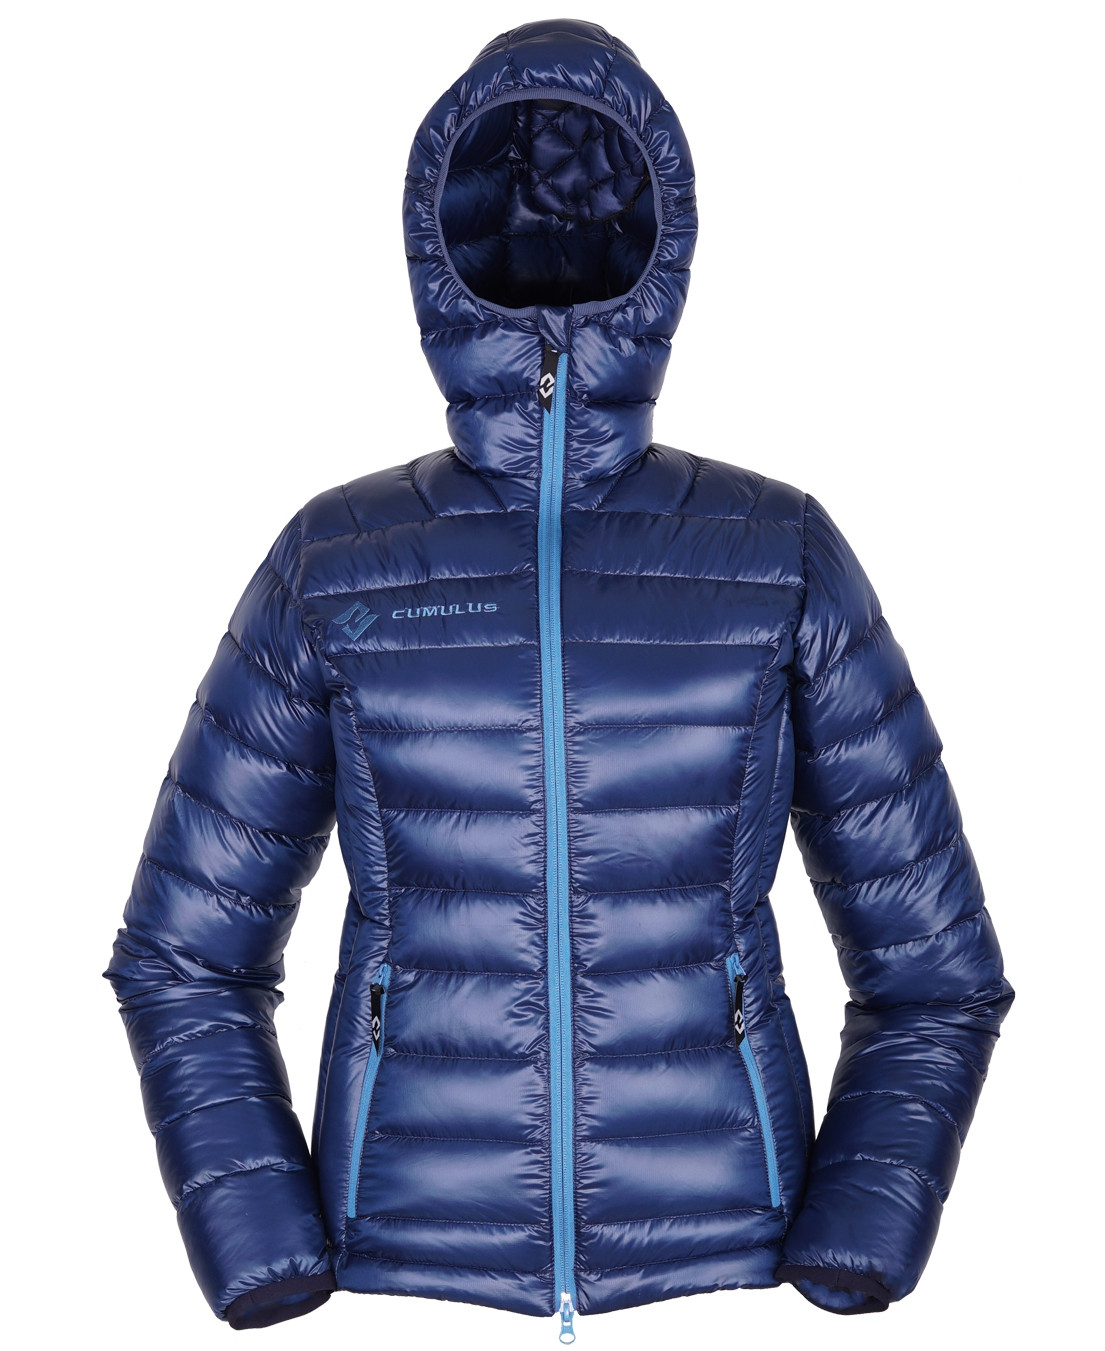 Jacket Incredilite Lady Cumulus - Warm and light jacket